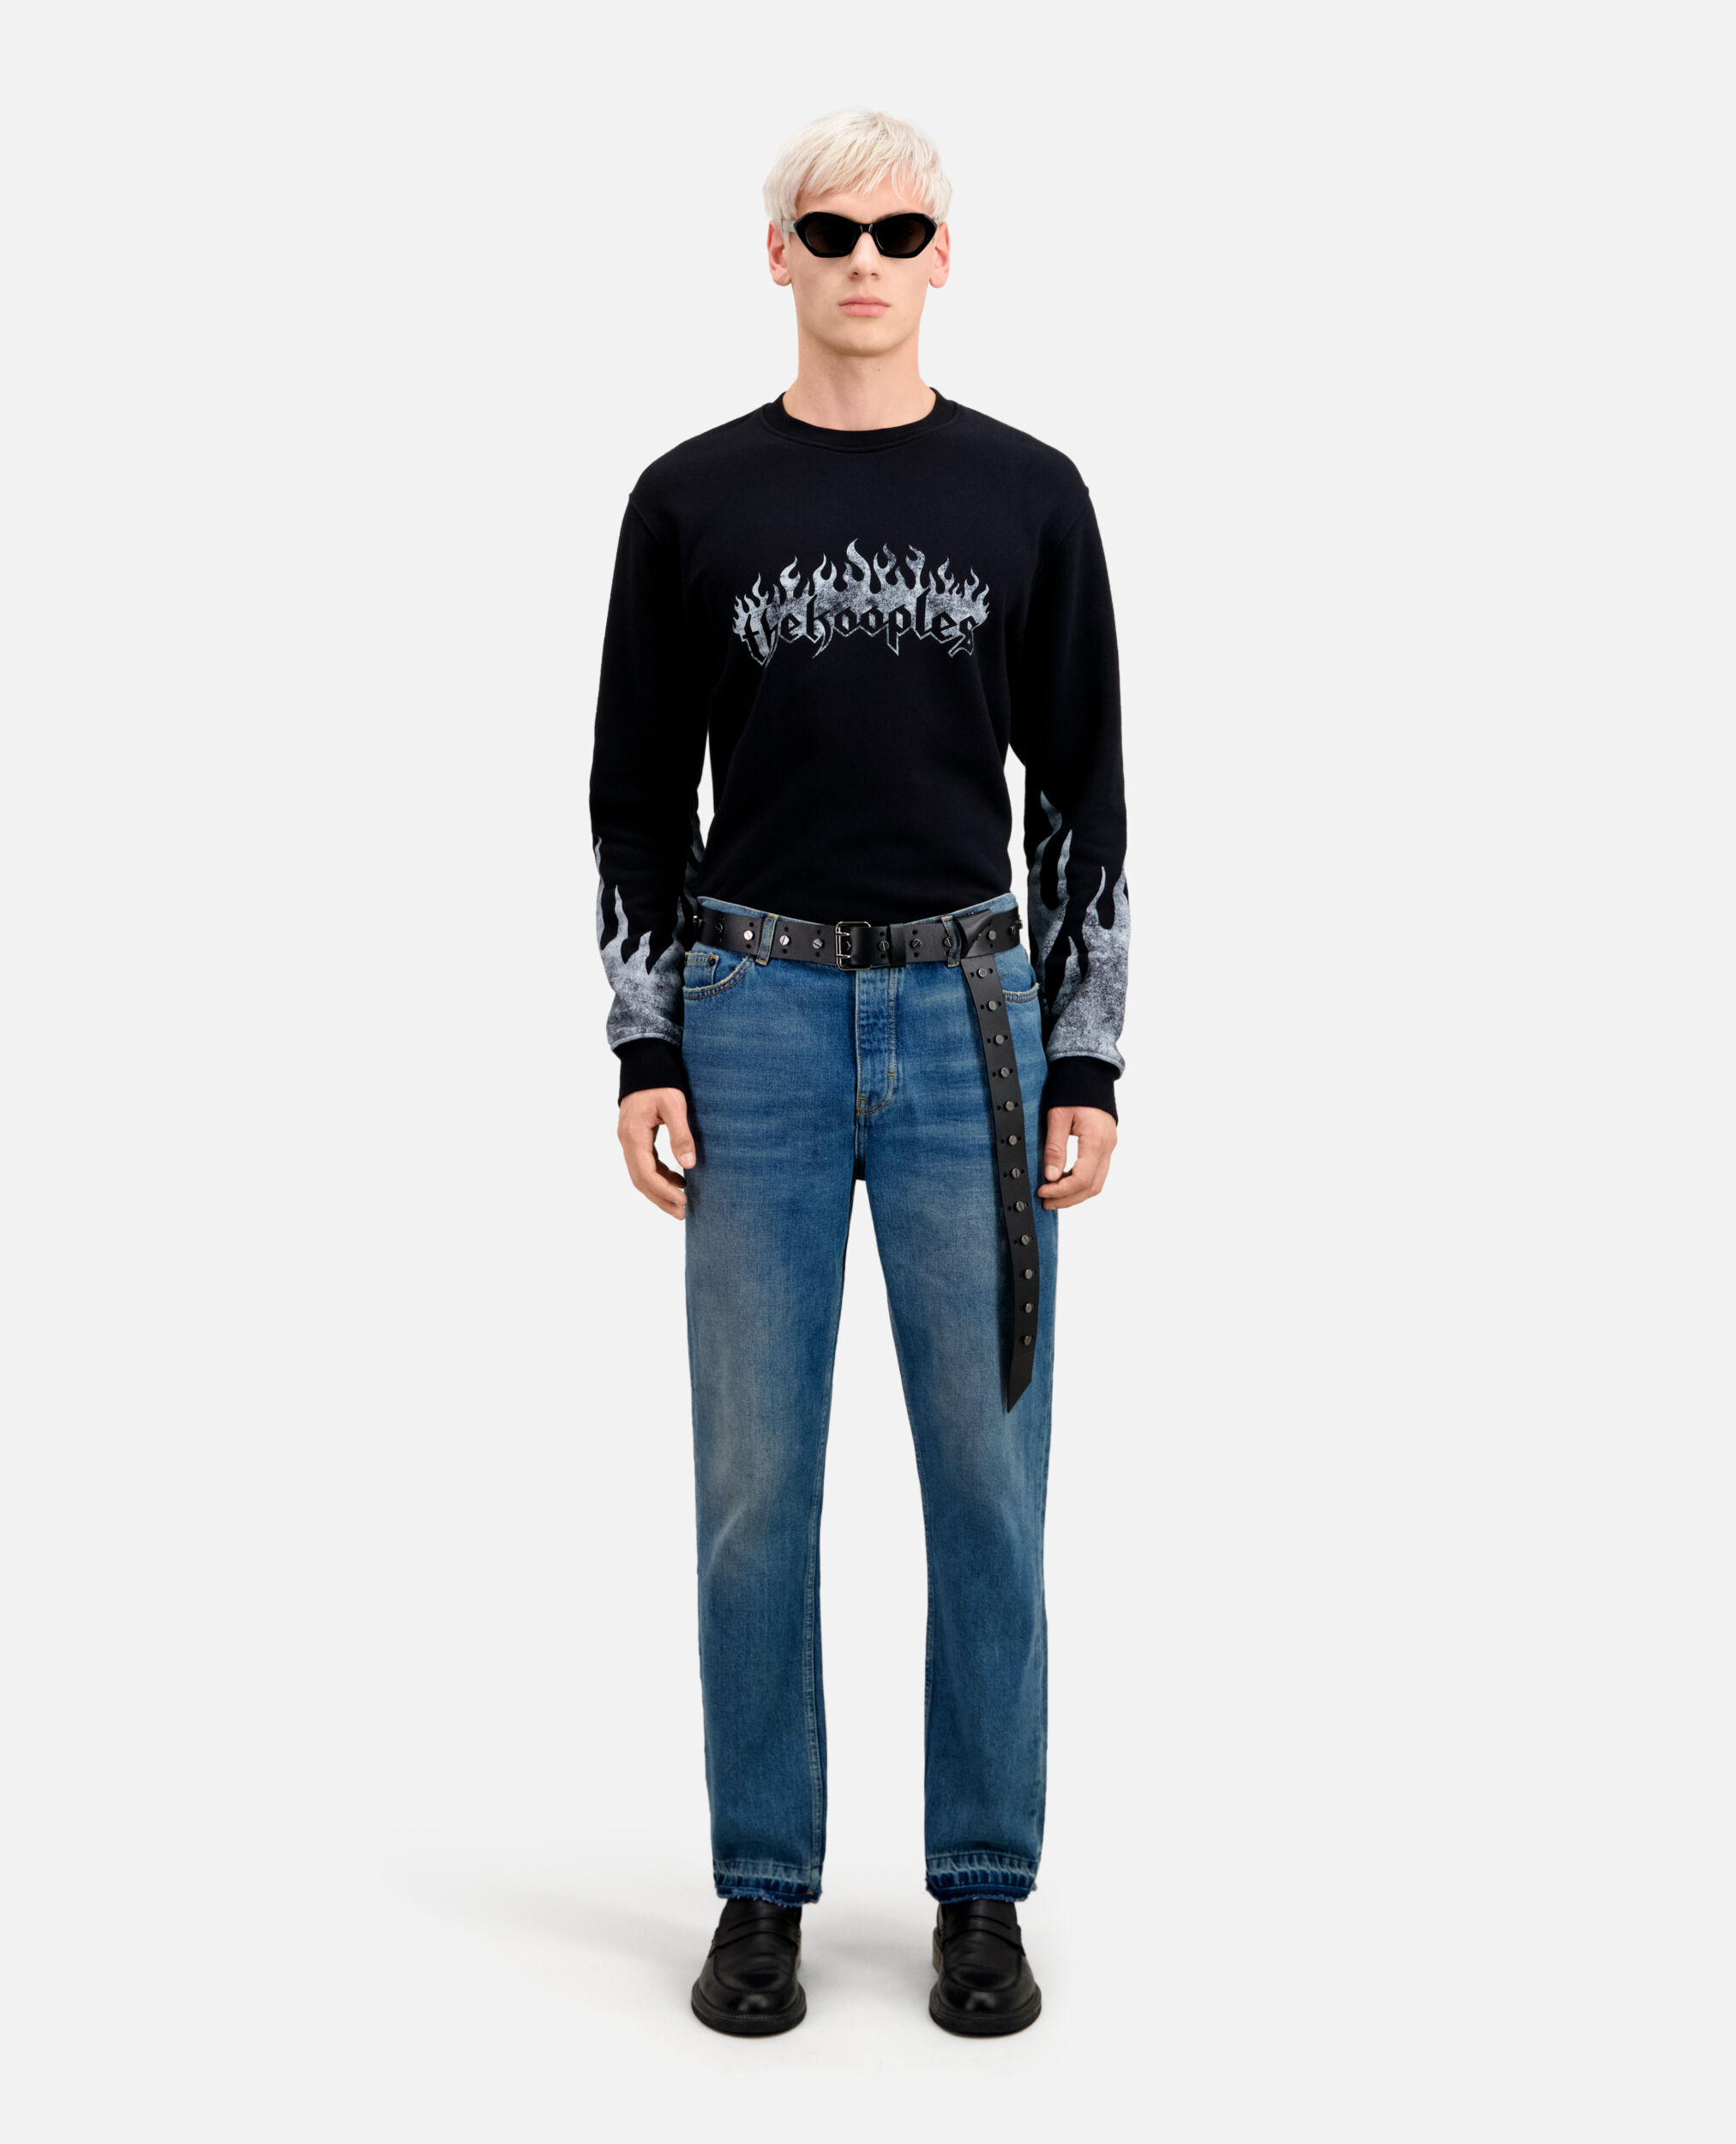 Men's Black sweatshirt with Kooples on fire serigraphy, BLACK, hi-res image number null